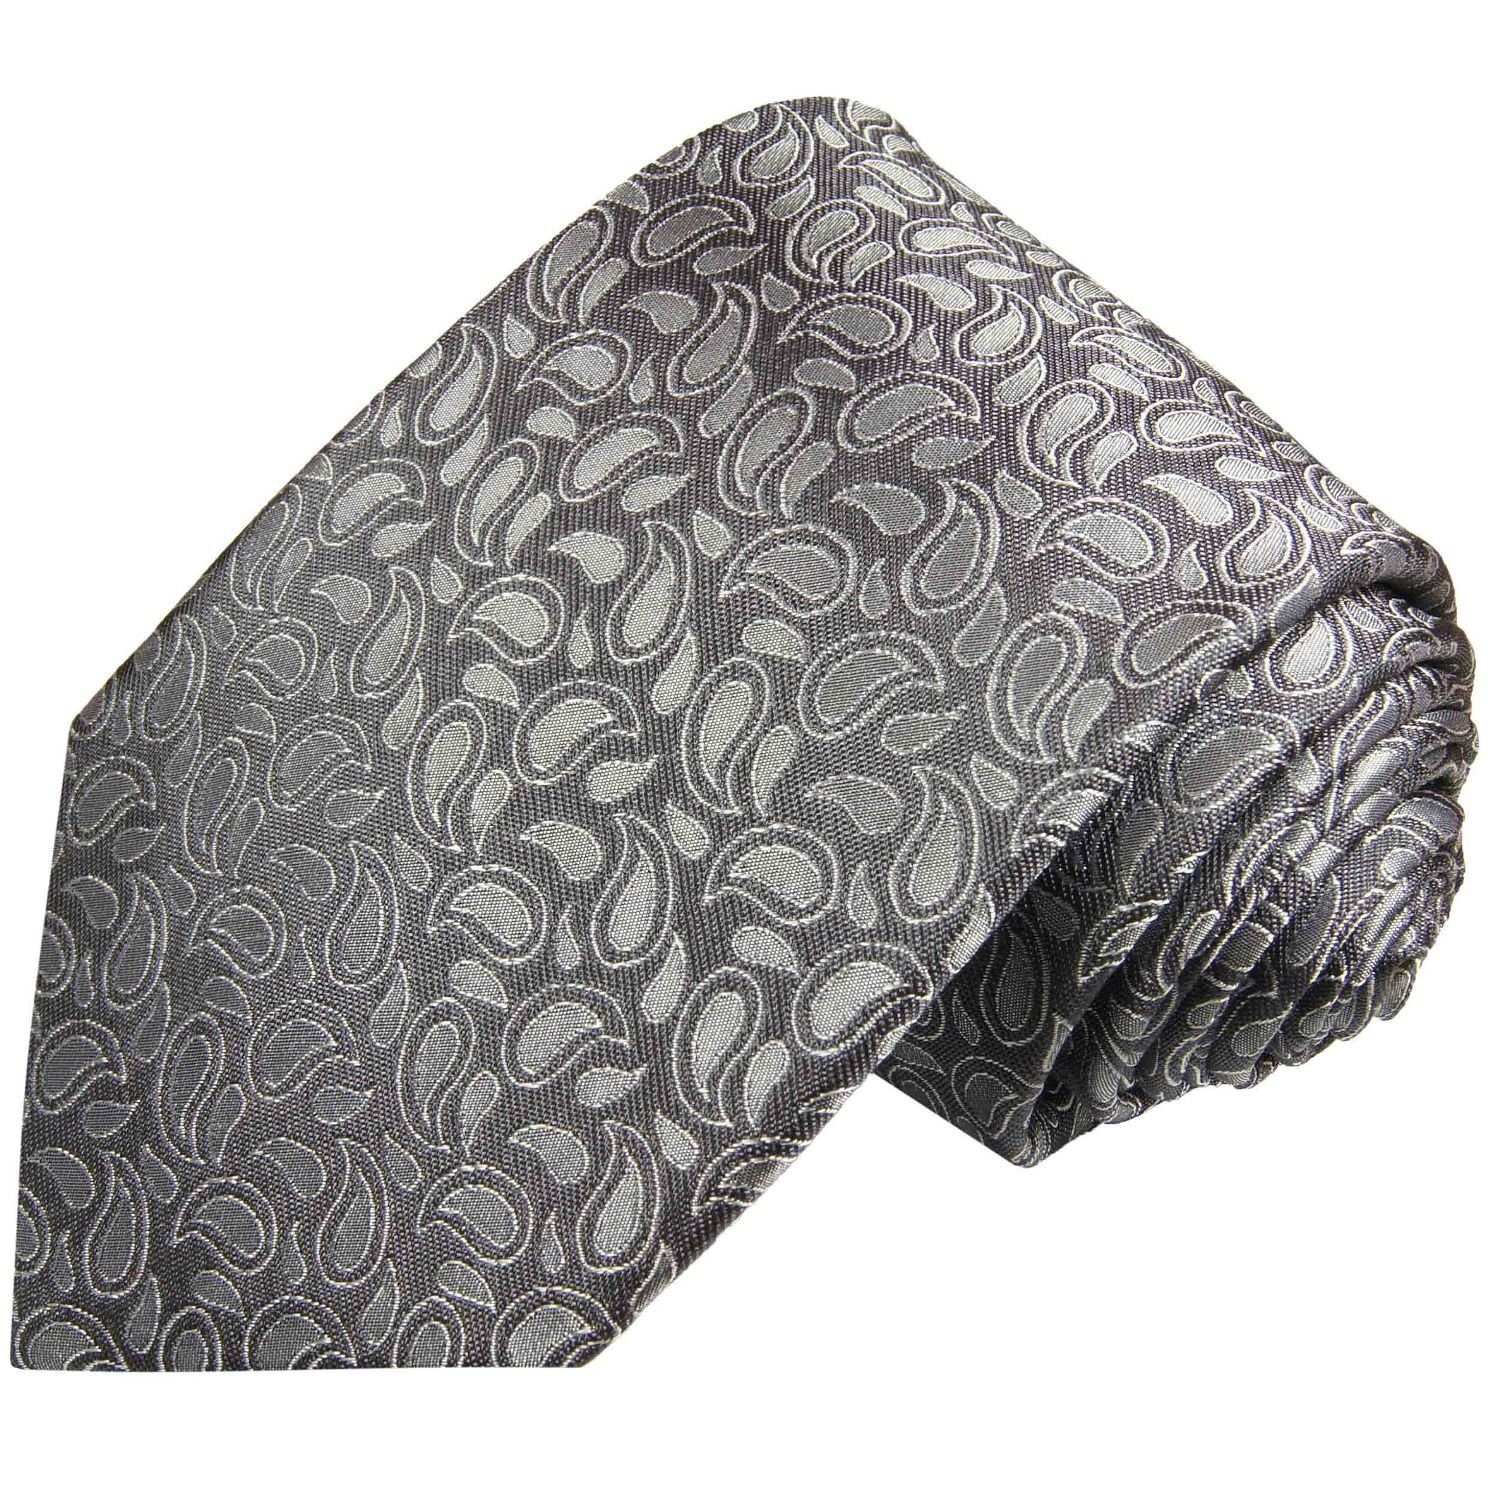 Paul Malone Krawatte Elegante Seidenkrawatte Herren Schlips paisley brokat 100% Seide Breit (8cm), silber grau 2005